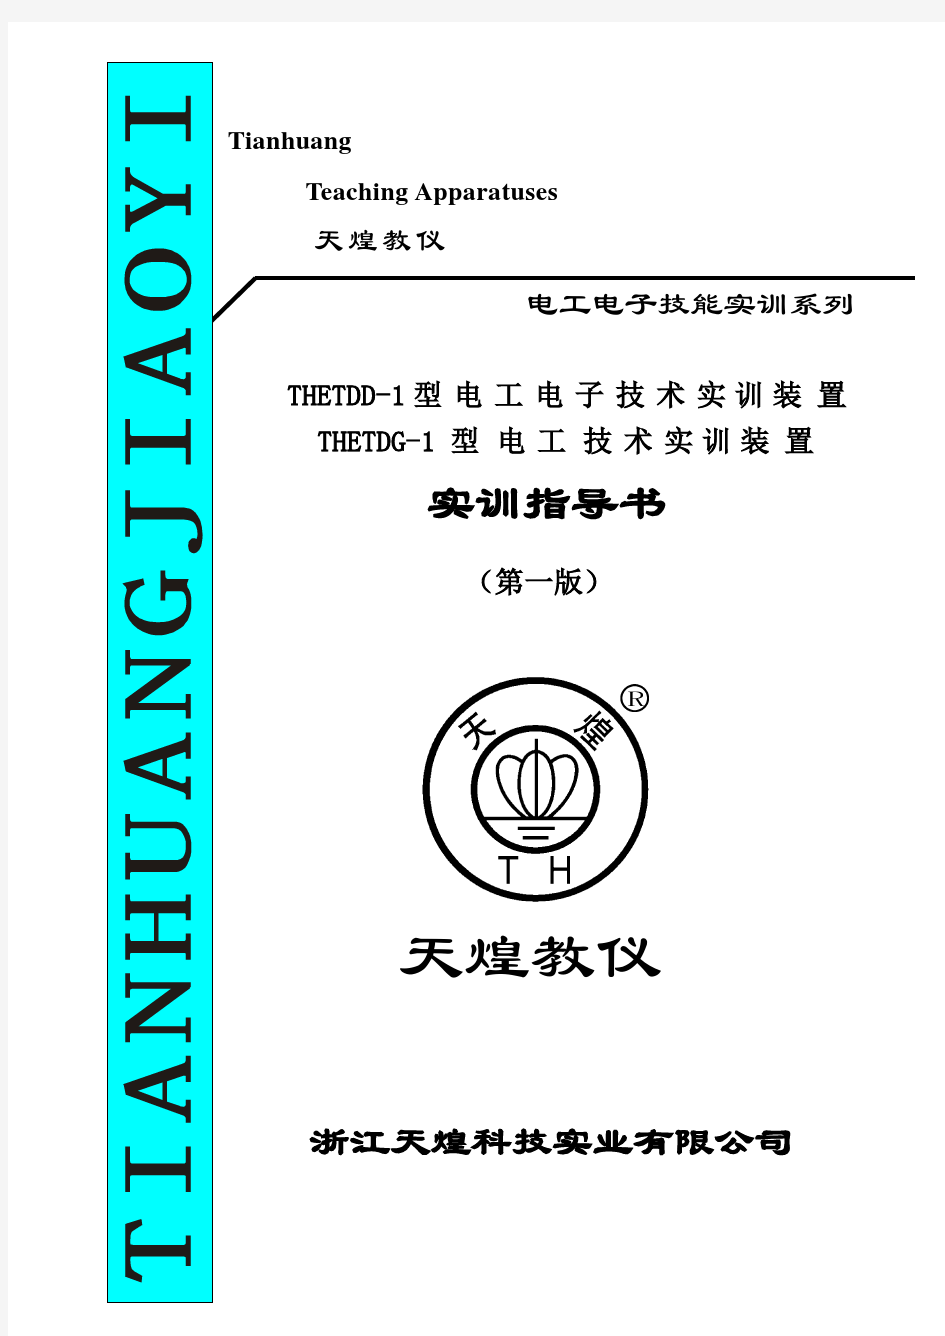 THETDG-1型电工技术实训装置实训指导书(第一版)